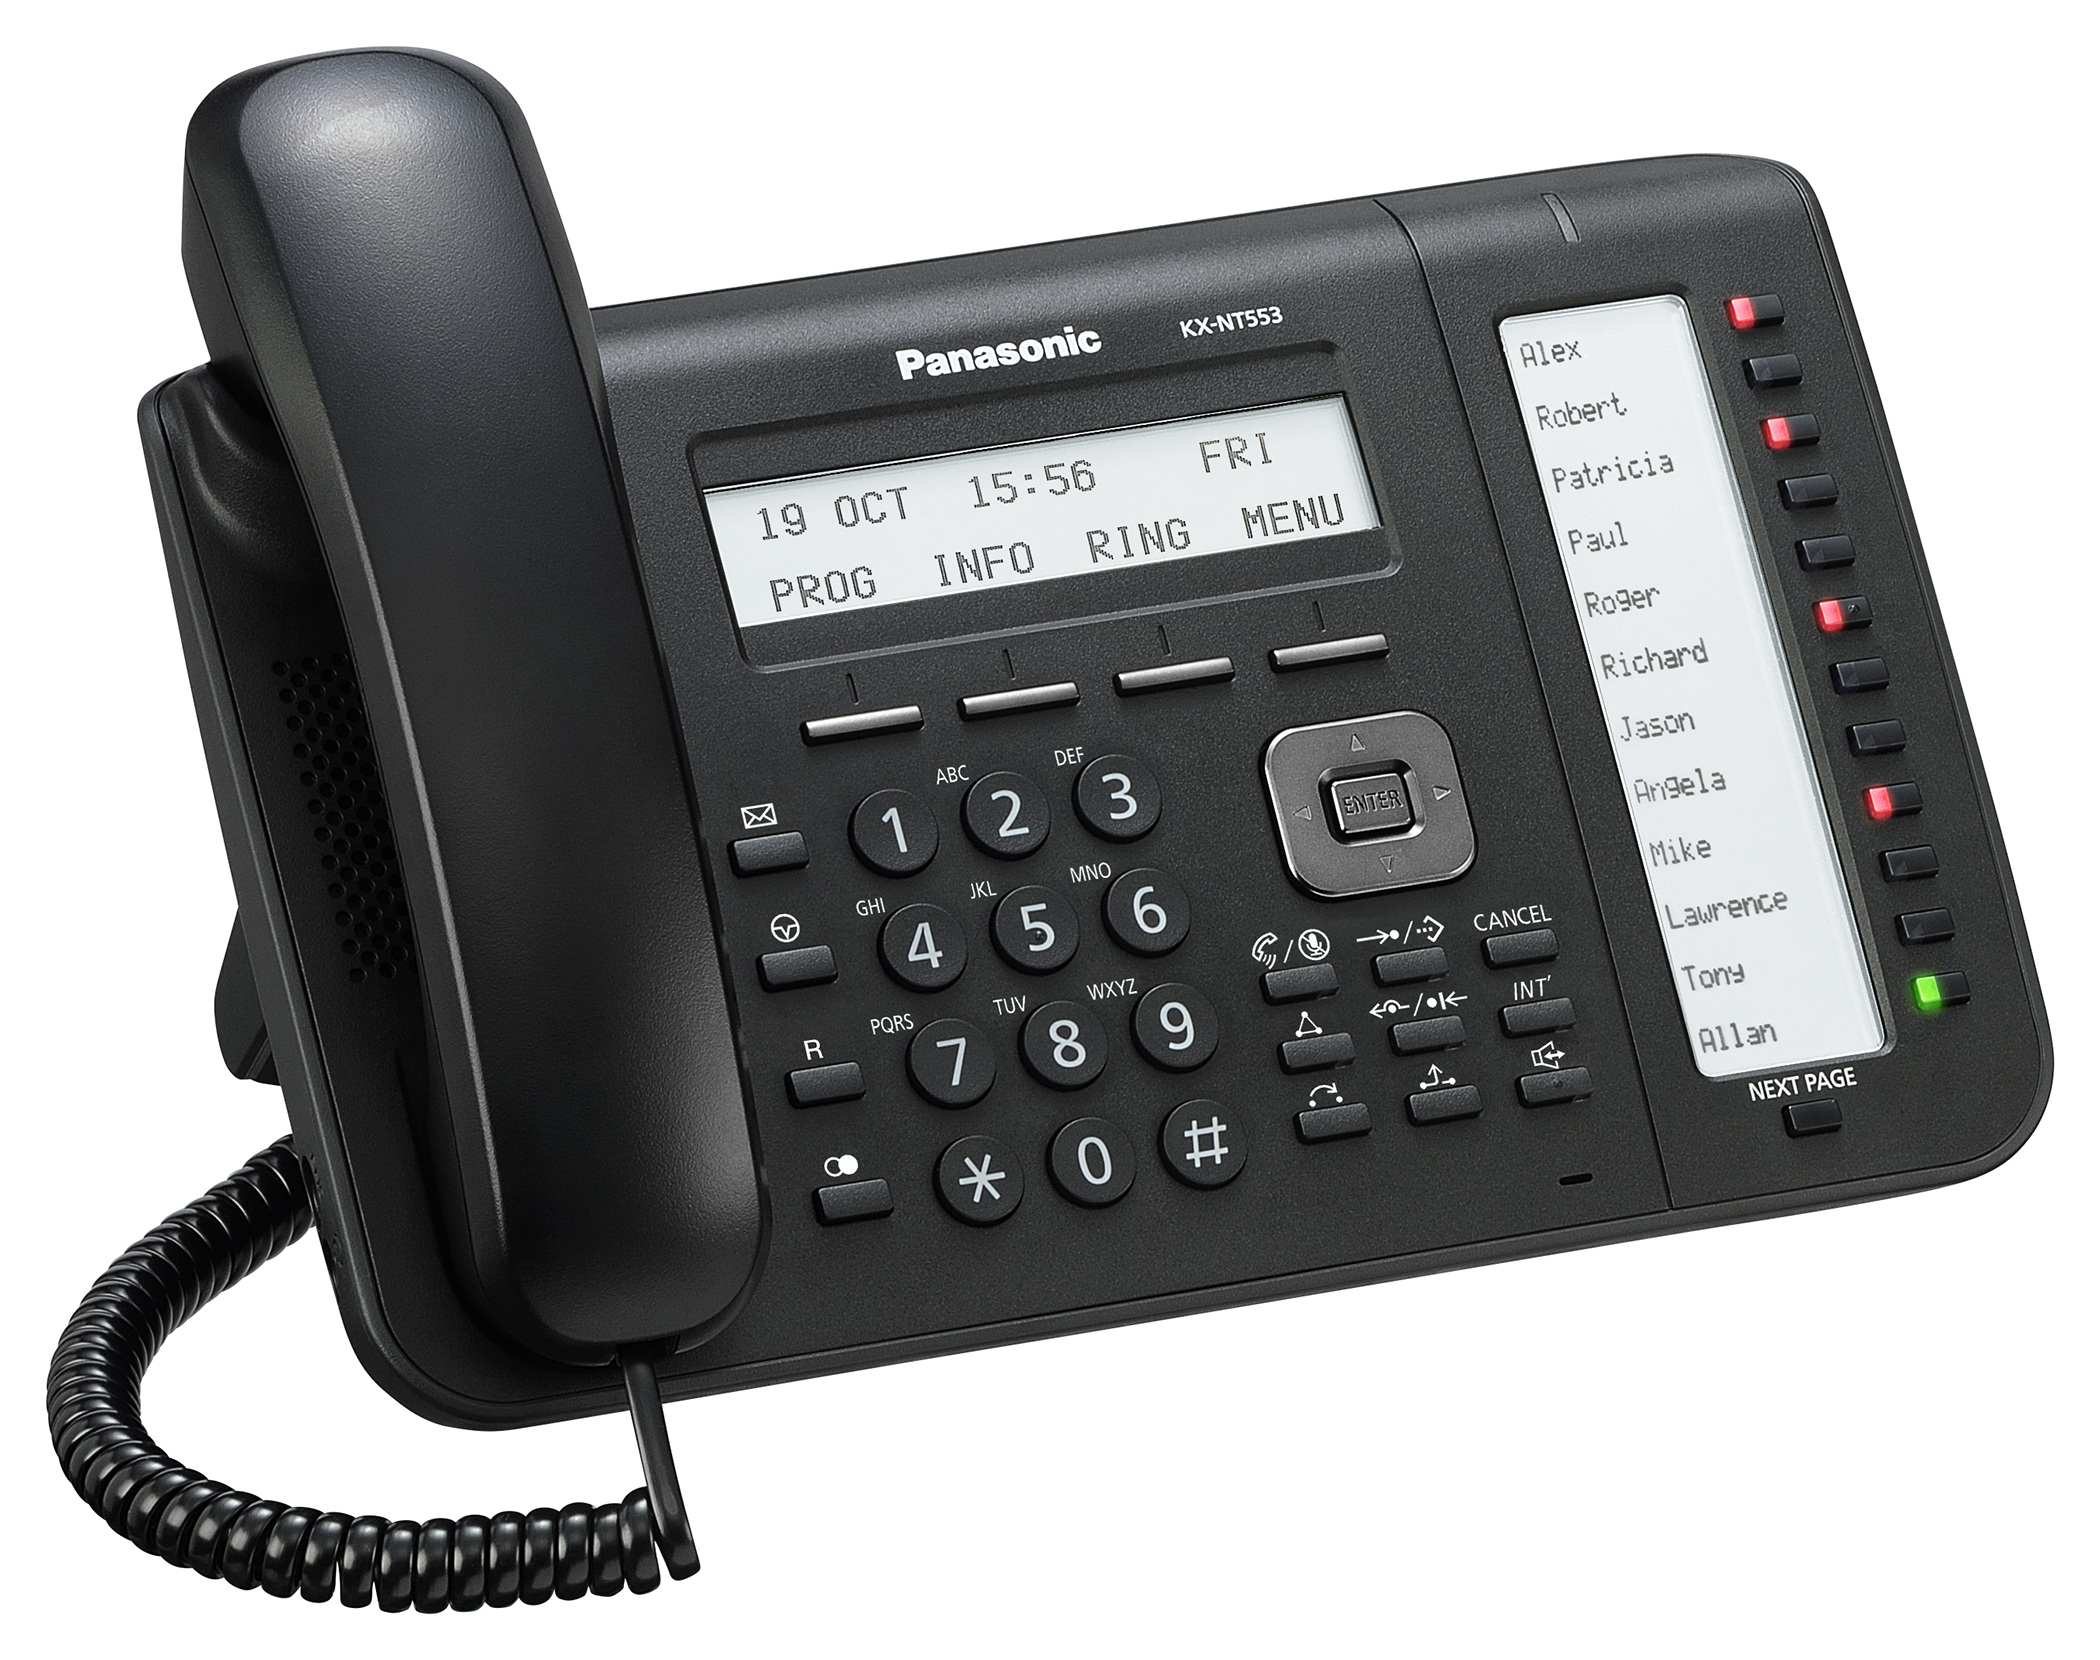 Telefono Panasonic KX-NT553 en color Negro para Conmutadores Panasonic Digitales KX-TDE, KX-NCP y Panasonic Servidor de Comunicaciones KX-NS